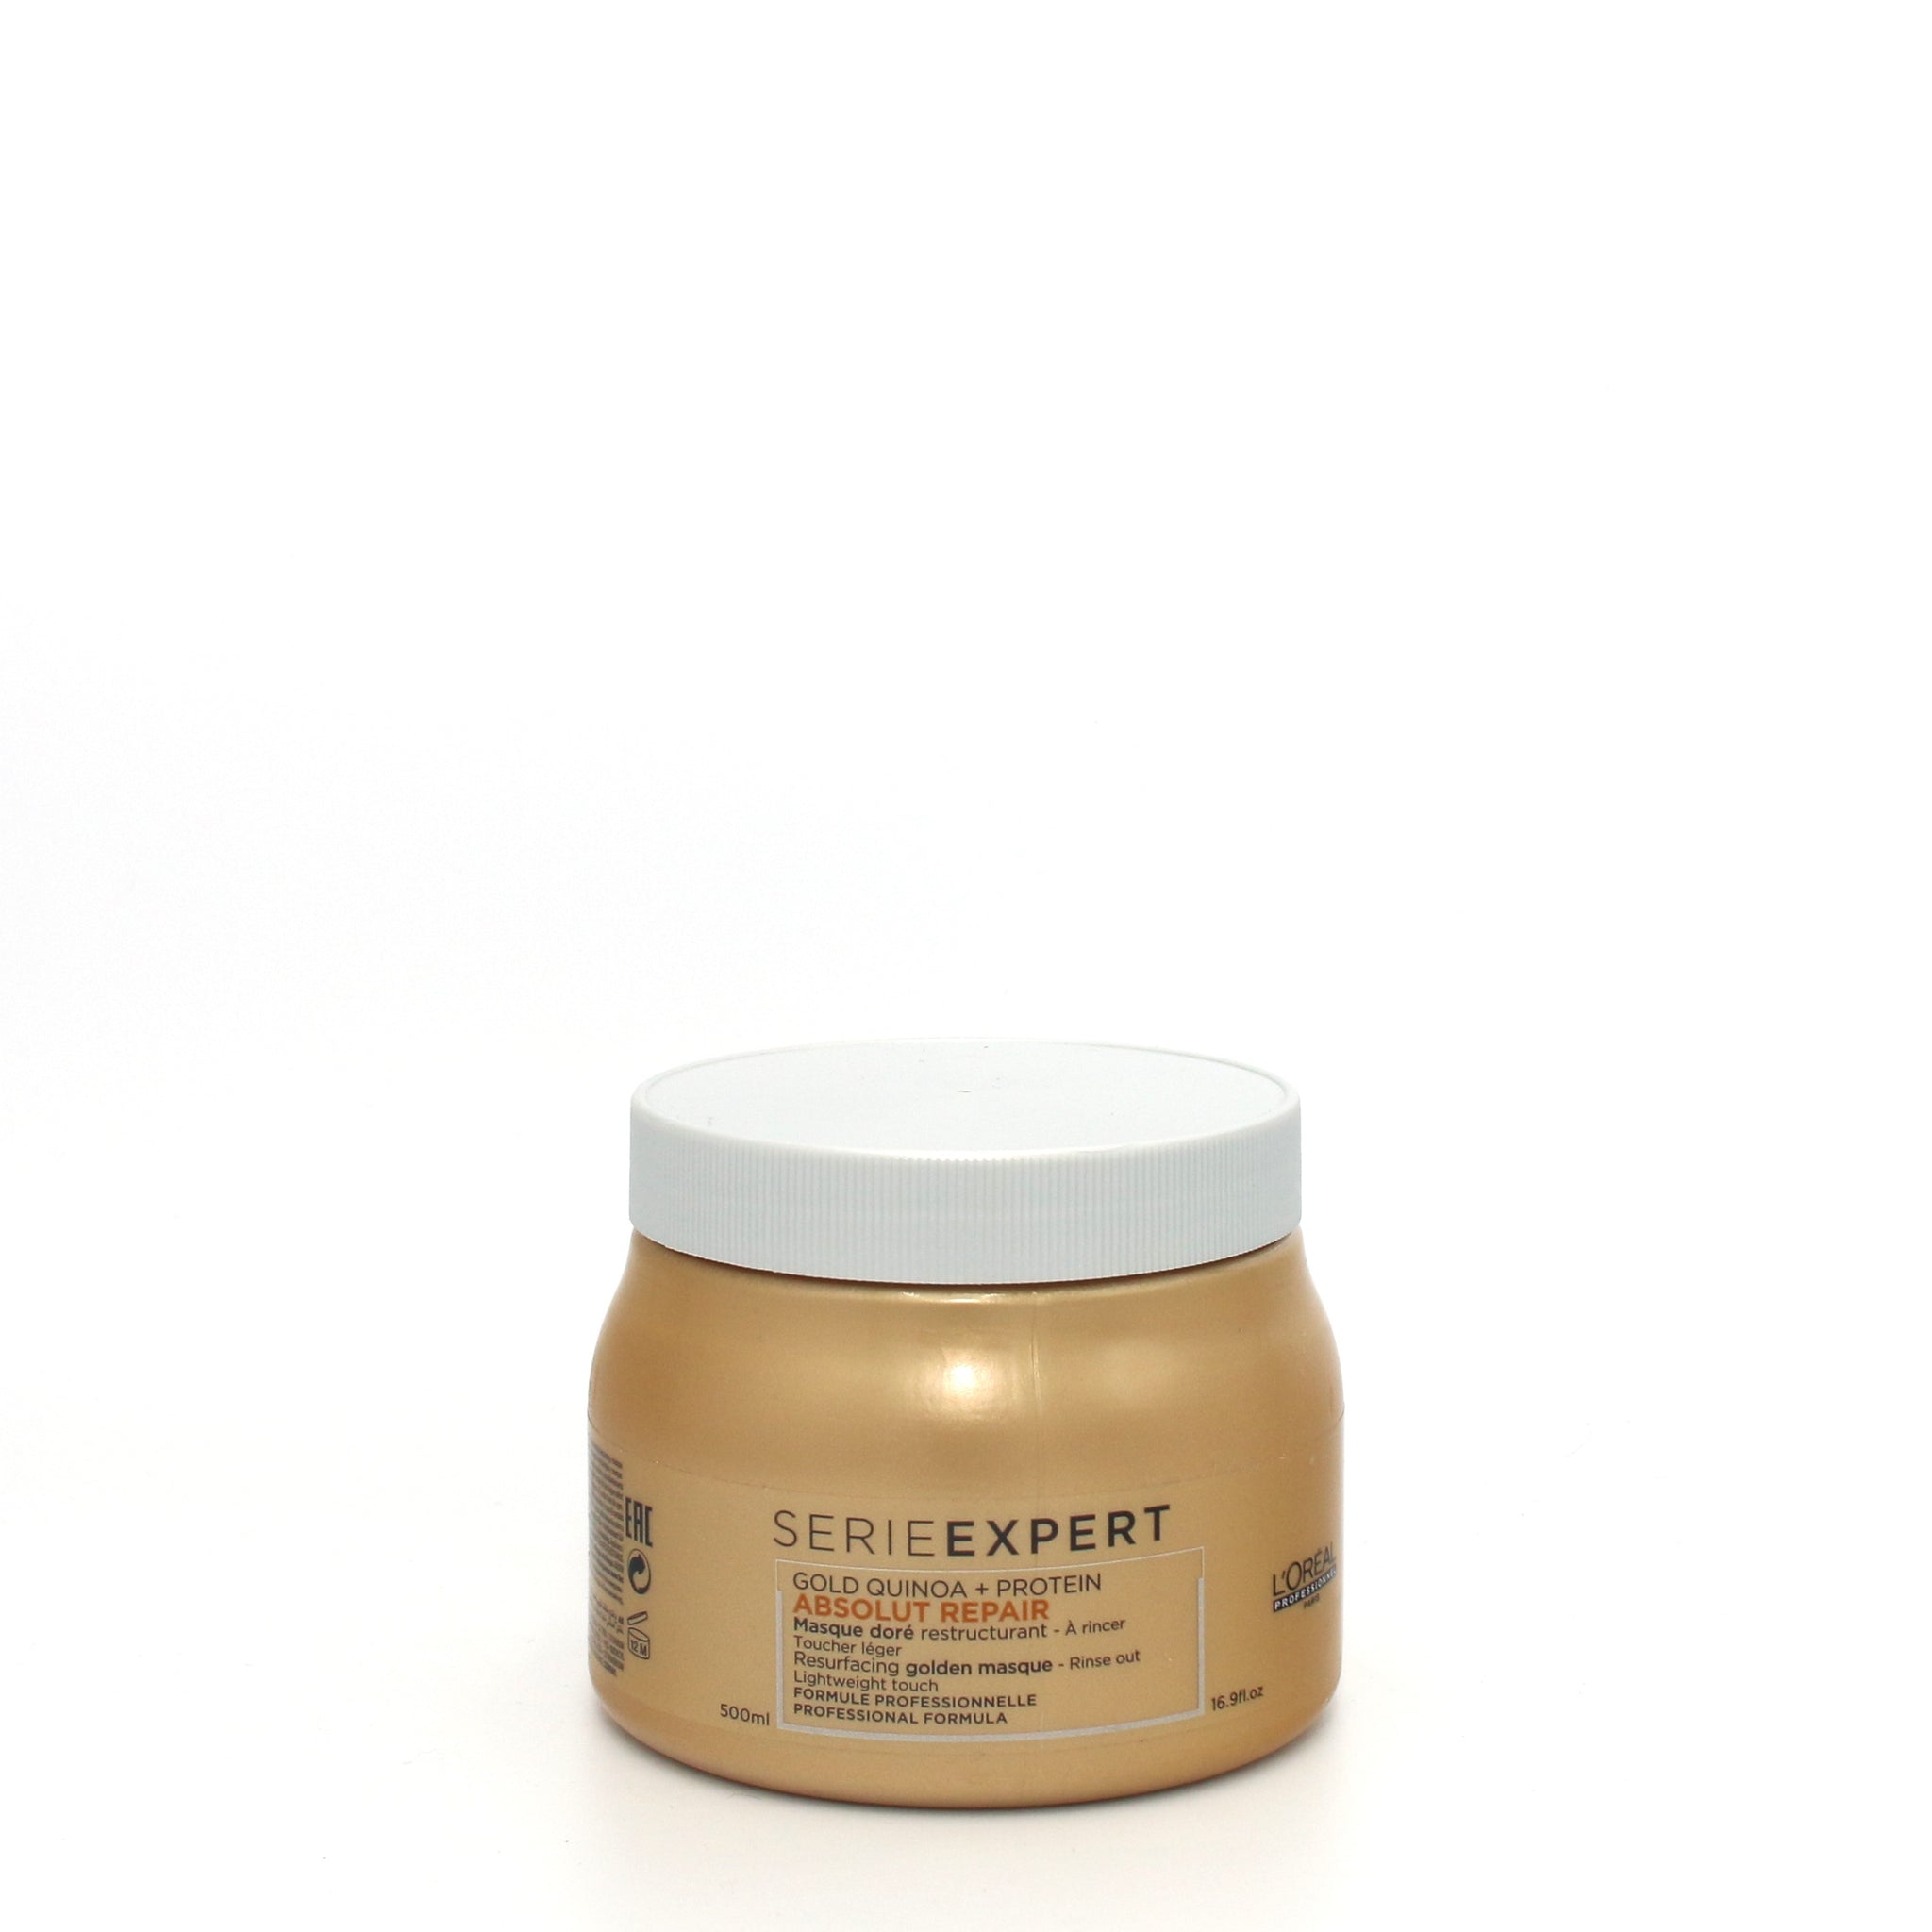 LOREAL Serie Expert Gold Quinoa + Protein Absolut Repair Masque 16.9 oz